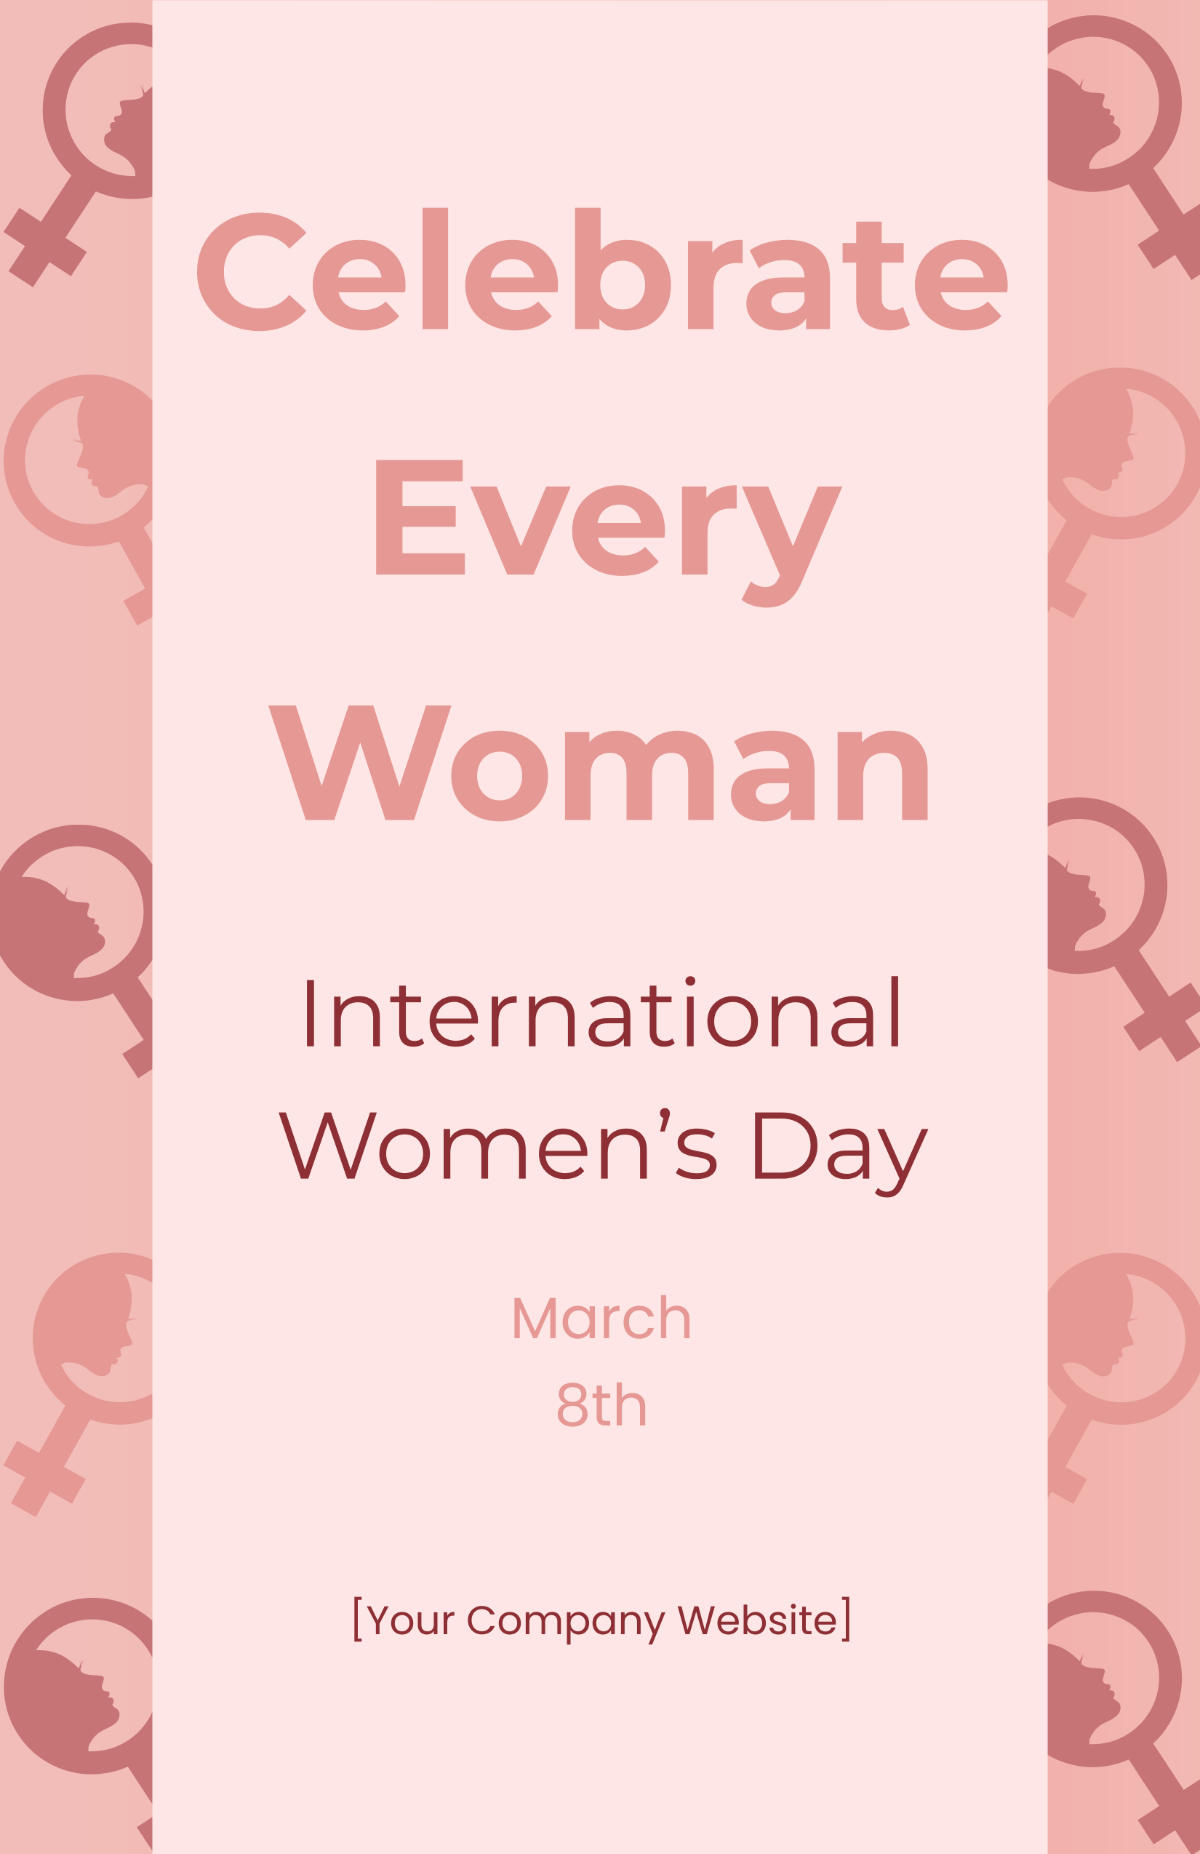 Free International Women’s Day Poster Template